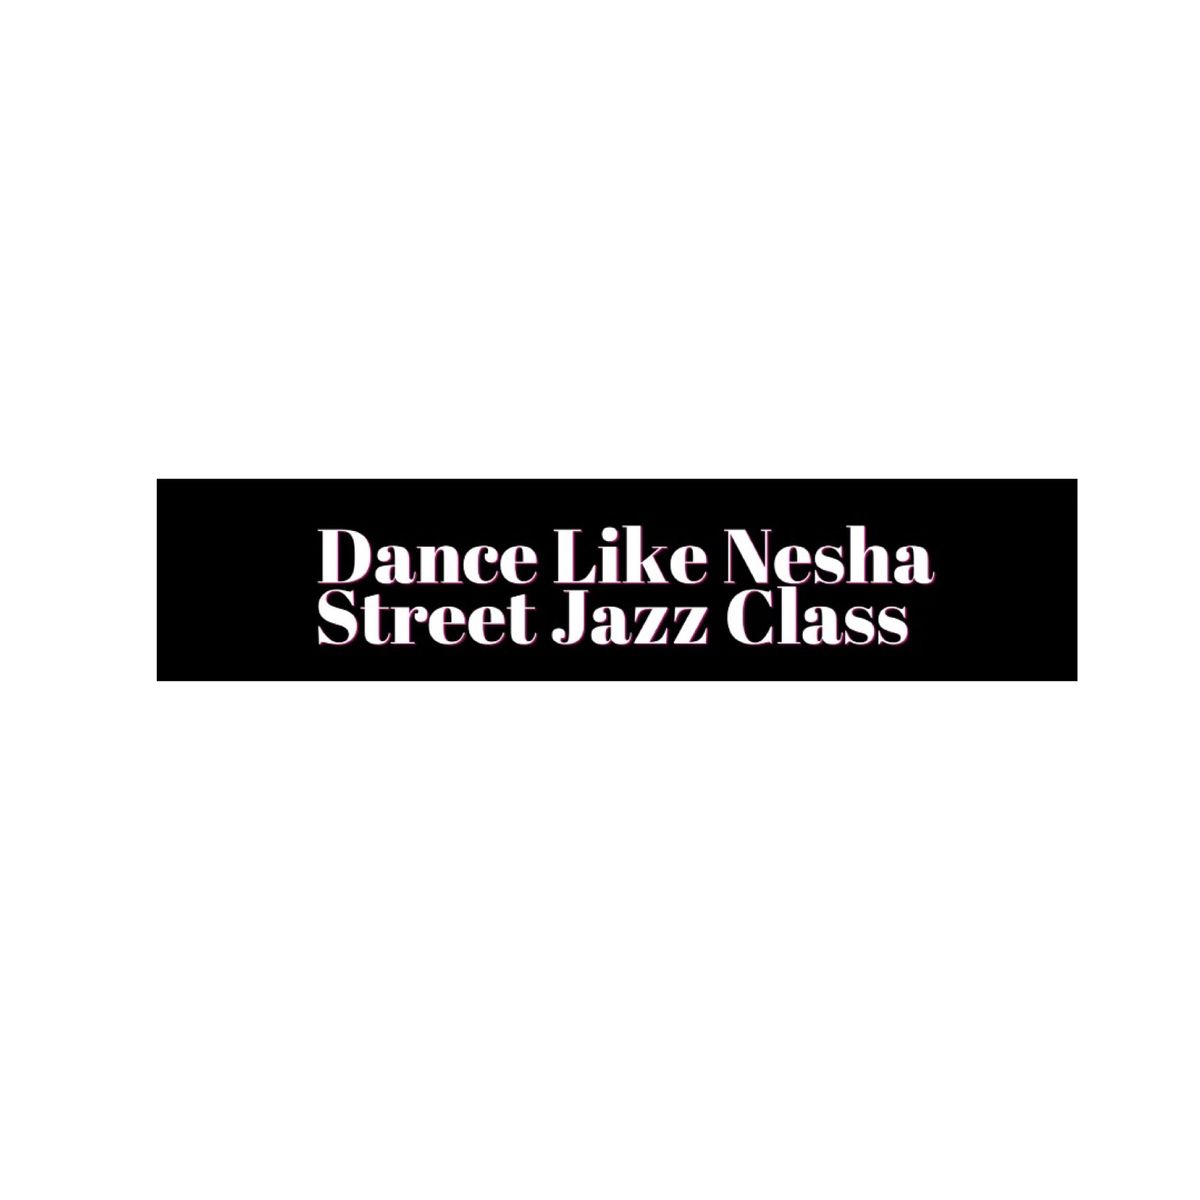 Dance Like Nesha Street Jazz Class